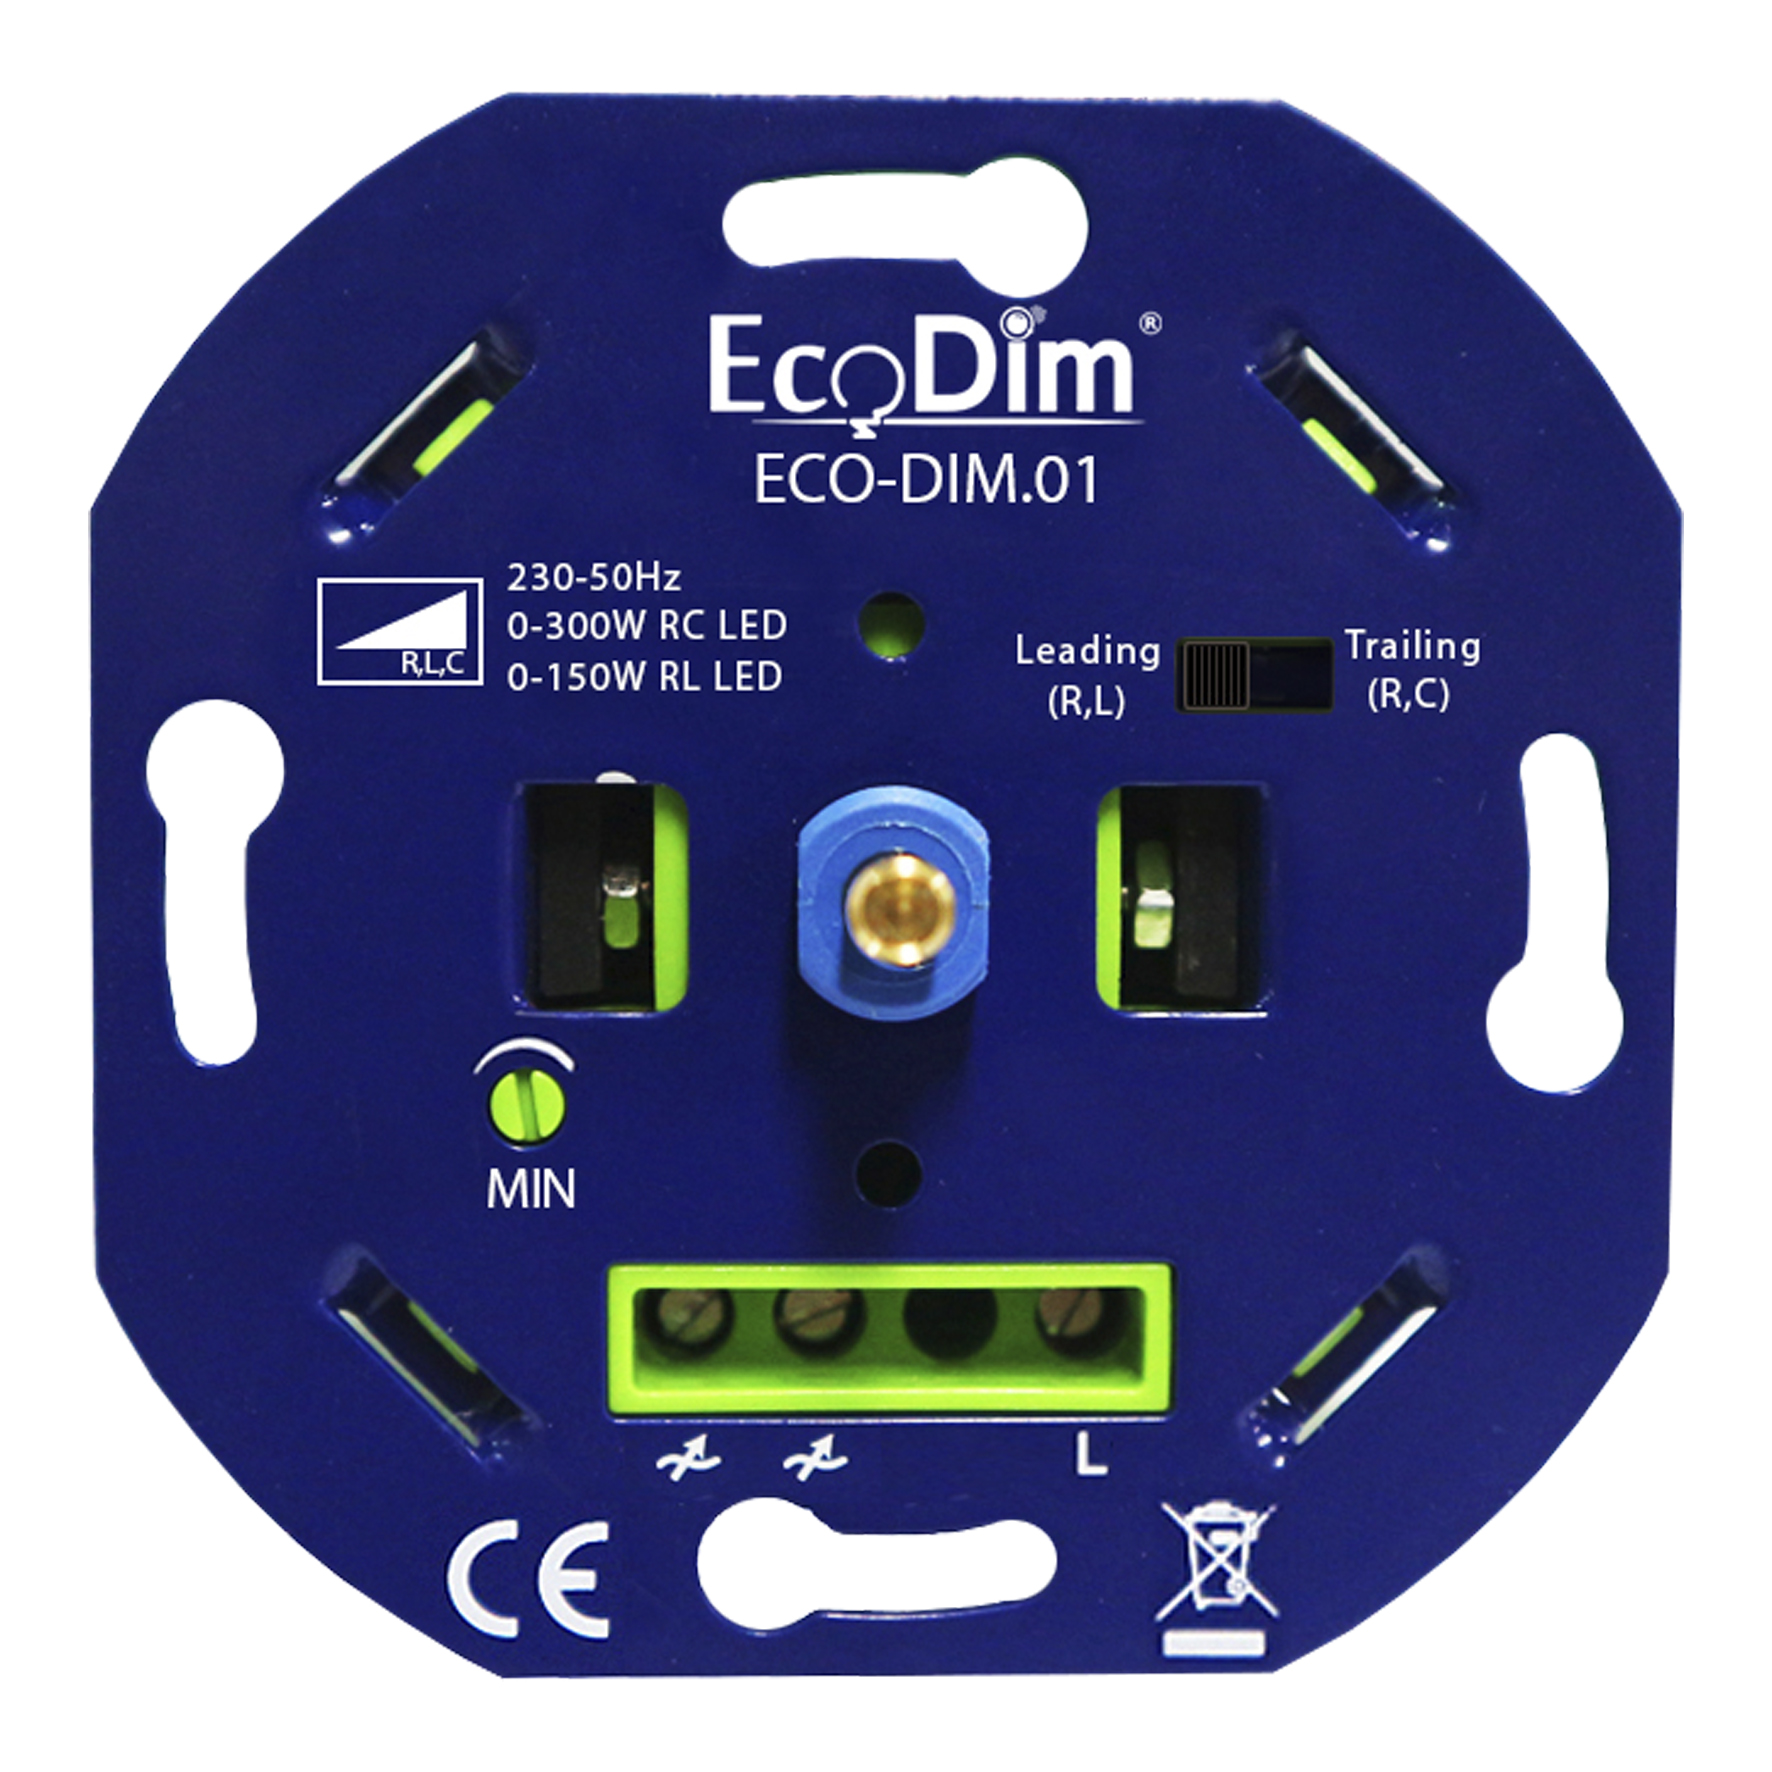 EcoDim ECO-DIM.01 LED Dimmer 0-300W PC and TE